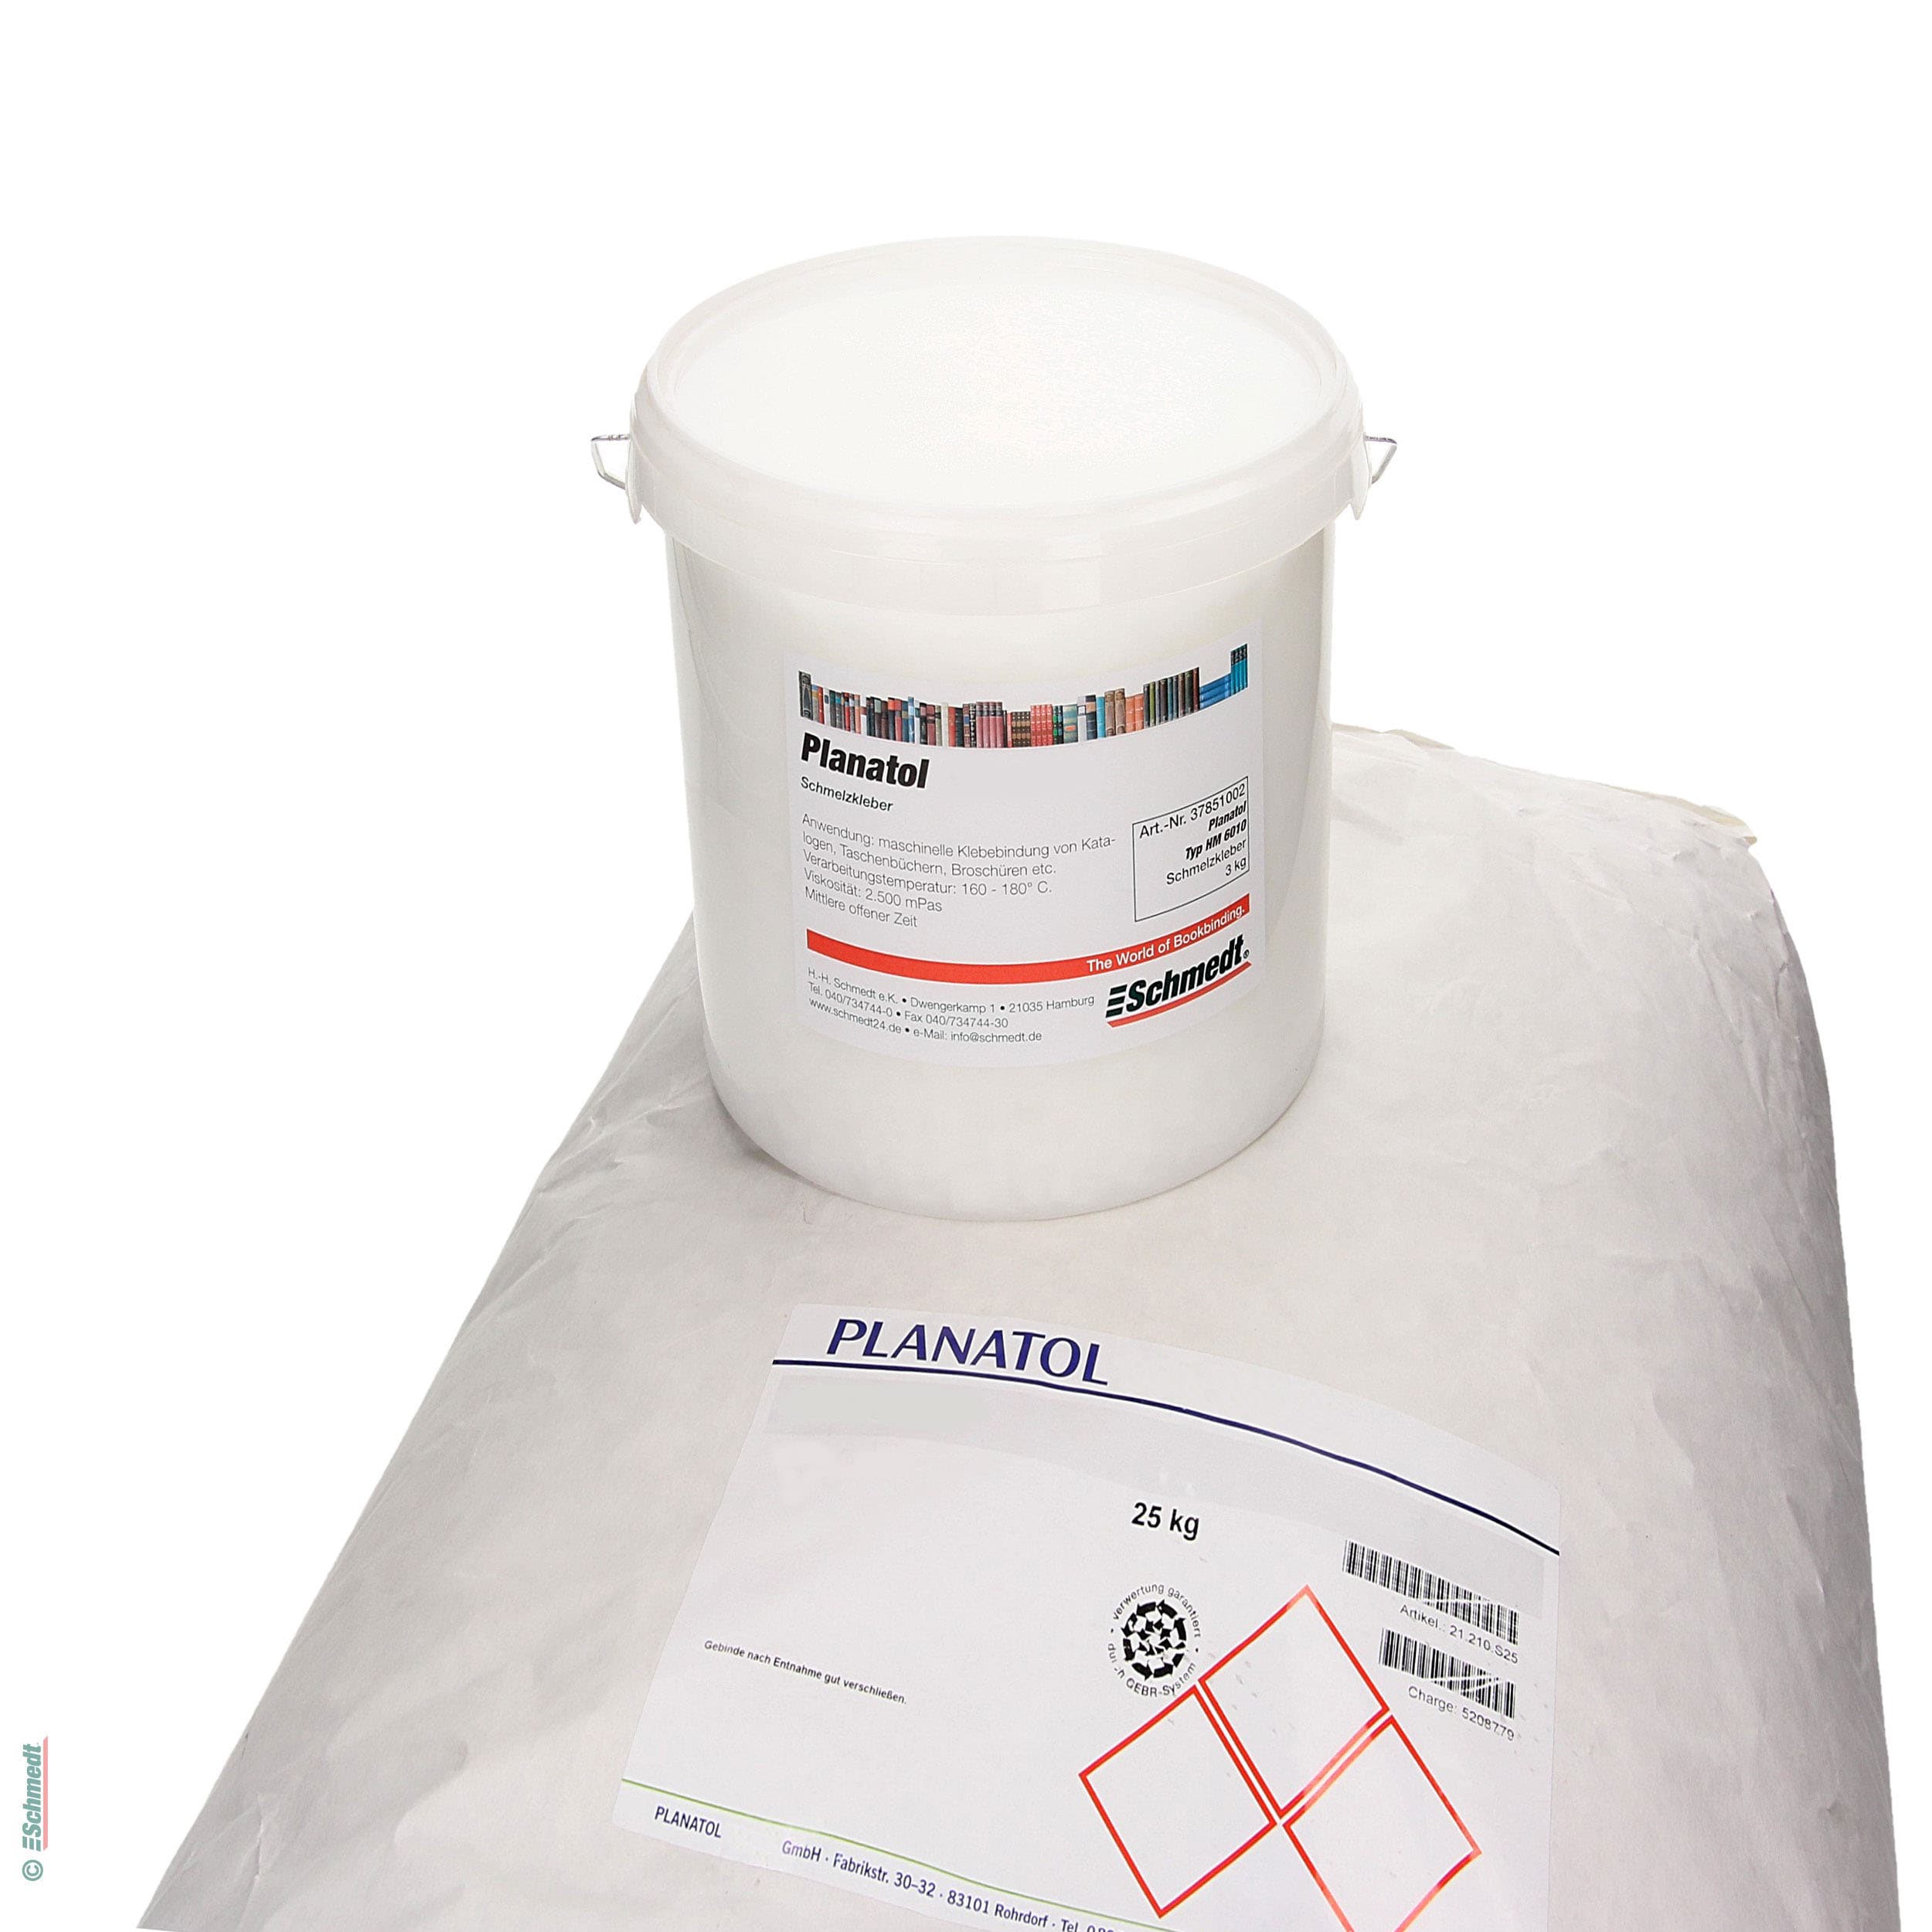 Planatol HM 6010 - hotmelt glue - Contents Bag / 25 kgs - For automatic fanbinding of catalogues, paperbacks, brochures etc....